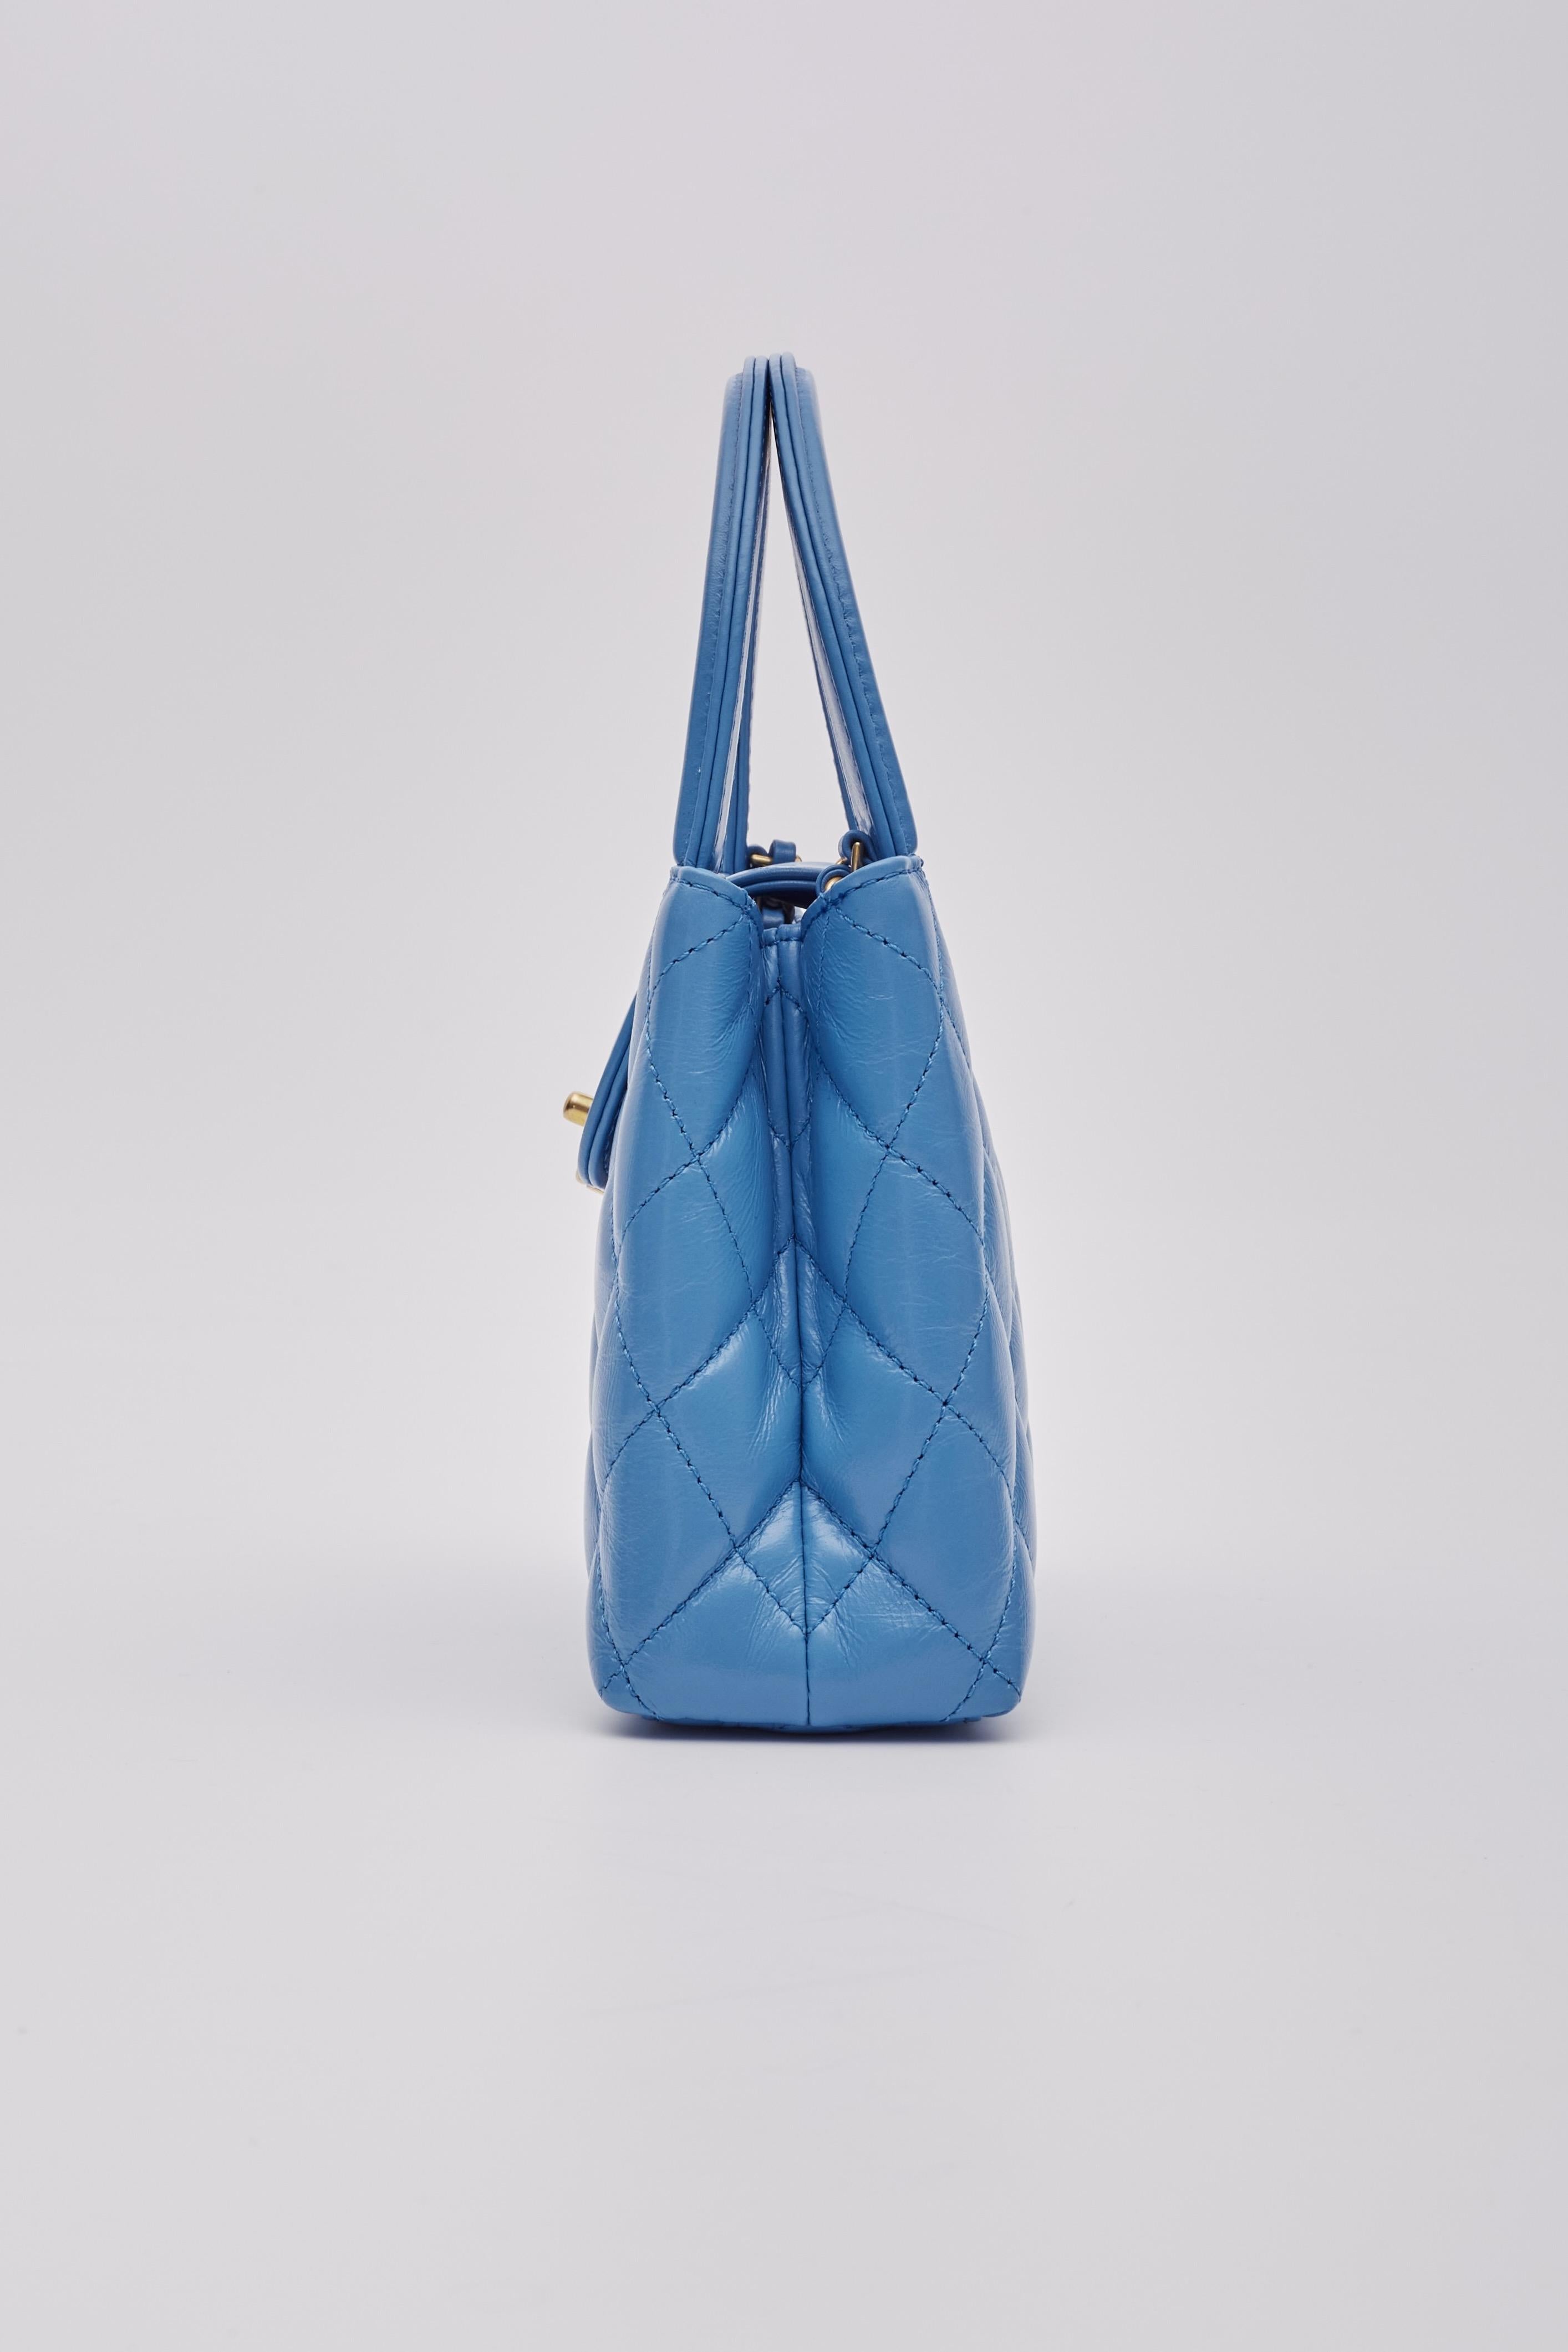 Chanel Blue Calfskin Mini Shopping Kelly Bag For Sale 3